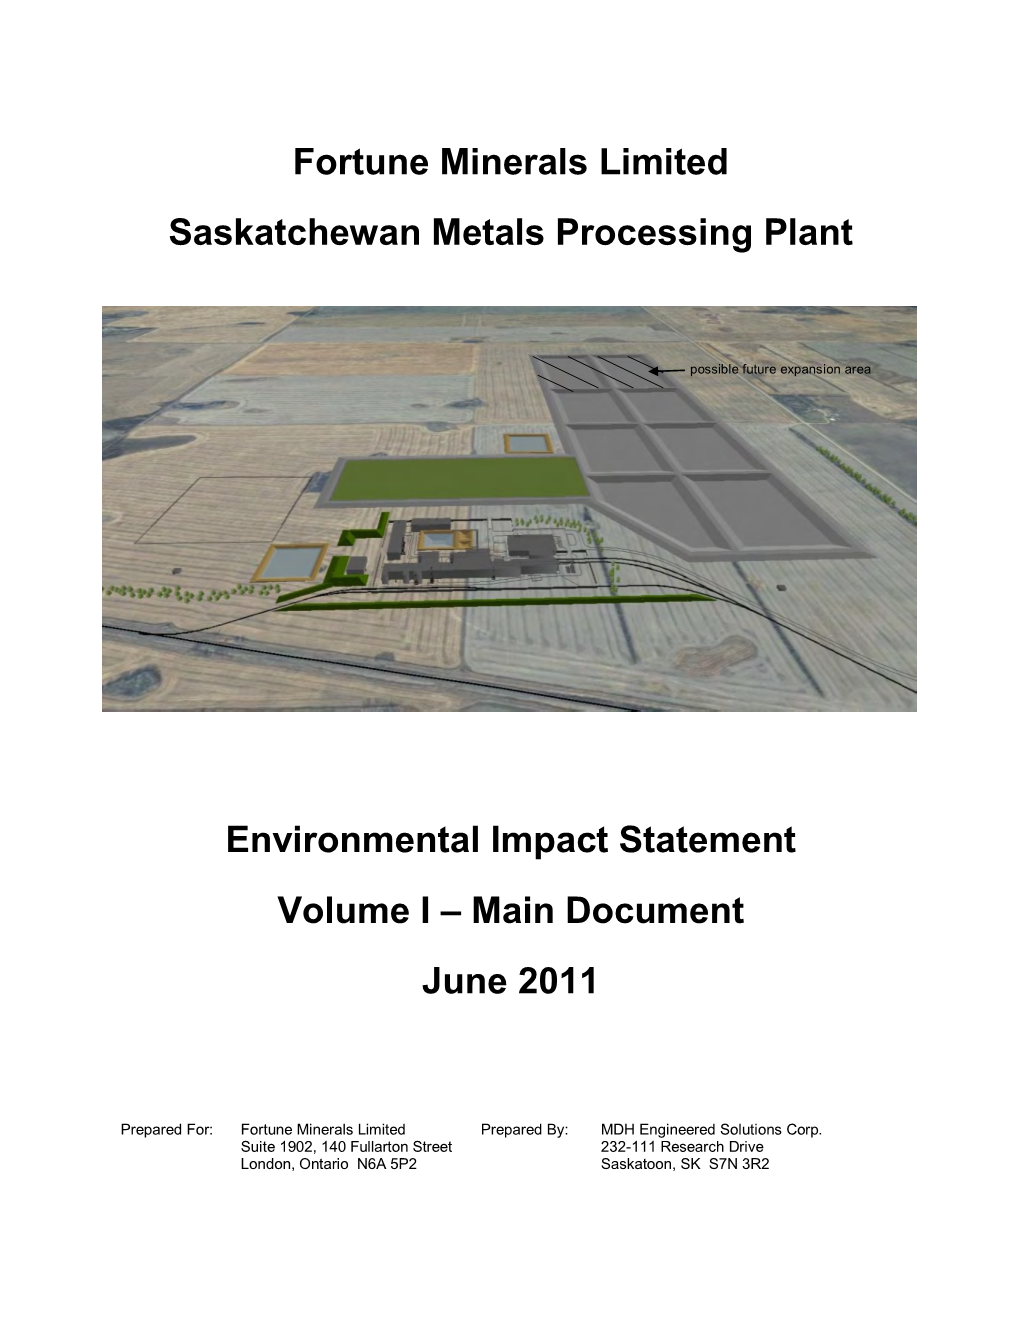 Fortune Minerals Limited Saskatchewan Metals Processing Plant Environmental Impact Statement Volume I – Main Document June